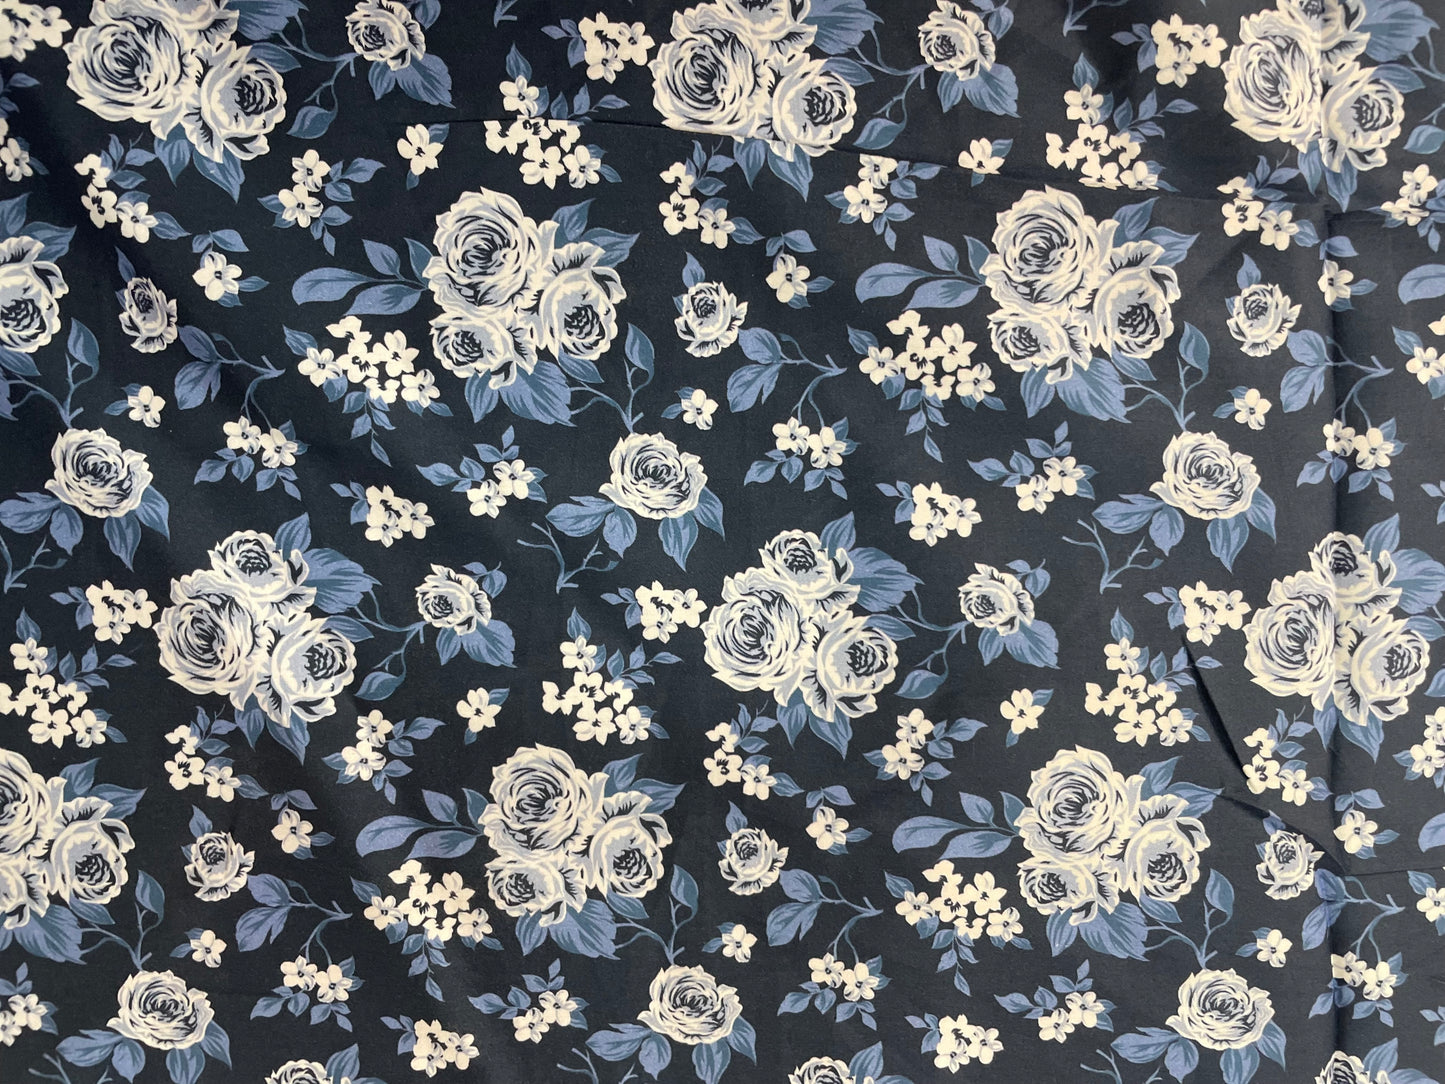 Floral Print Cotton Calico Satin Finish - Blue, Black & White